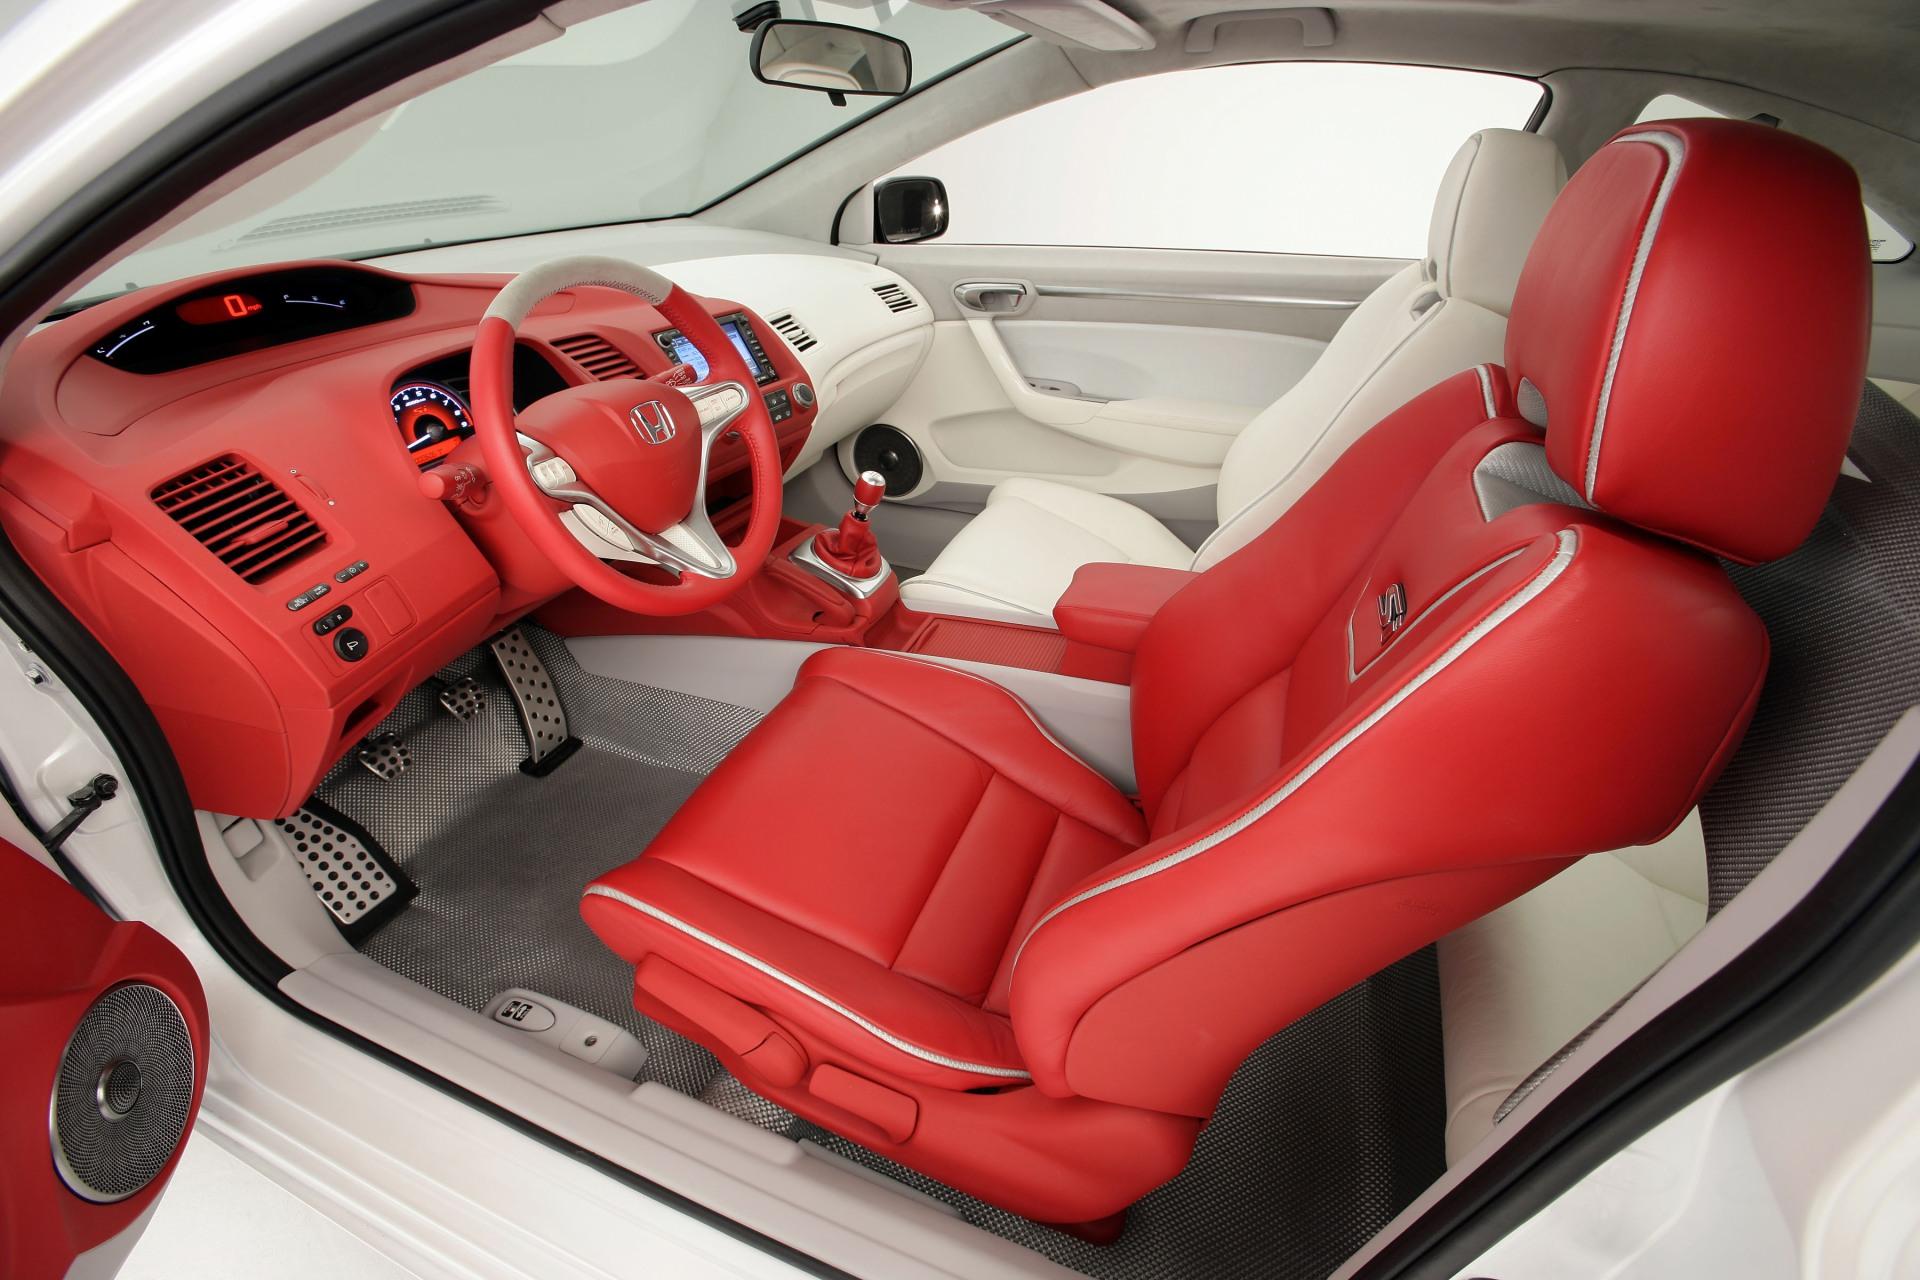 Avto com ru. Хонда Цивик красный салон. Красный салон кожа Civic 4d. Хонда Цивик 2005 салон. Красный салон Хонда Цивик 4д.